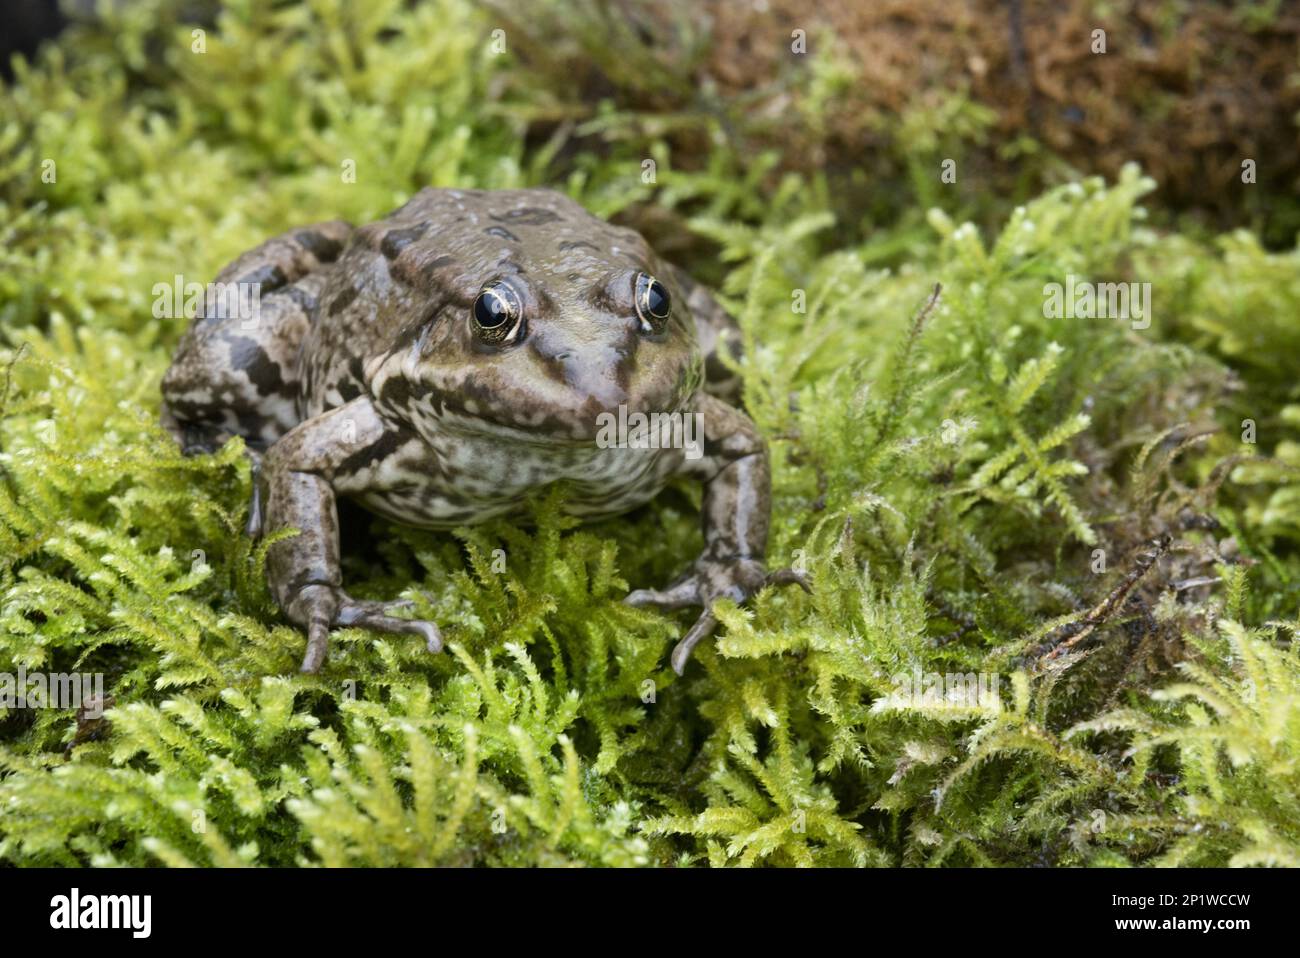 Marsh Frog (Pelophylax ridibundus) introdusse specie, adulte, seduta sulla muschio, Inghilterra, Regno Unito Foto Stock